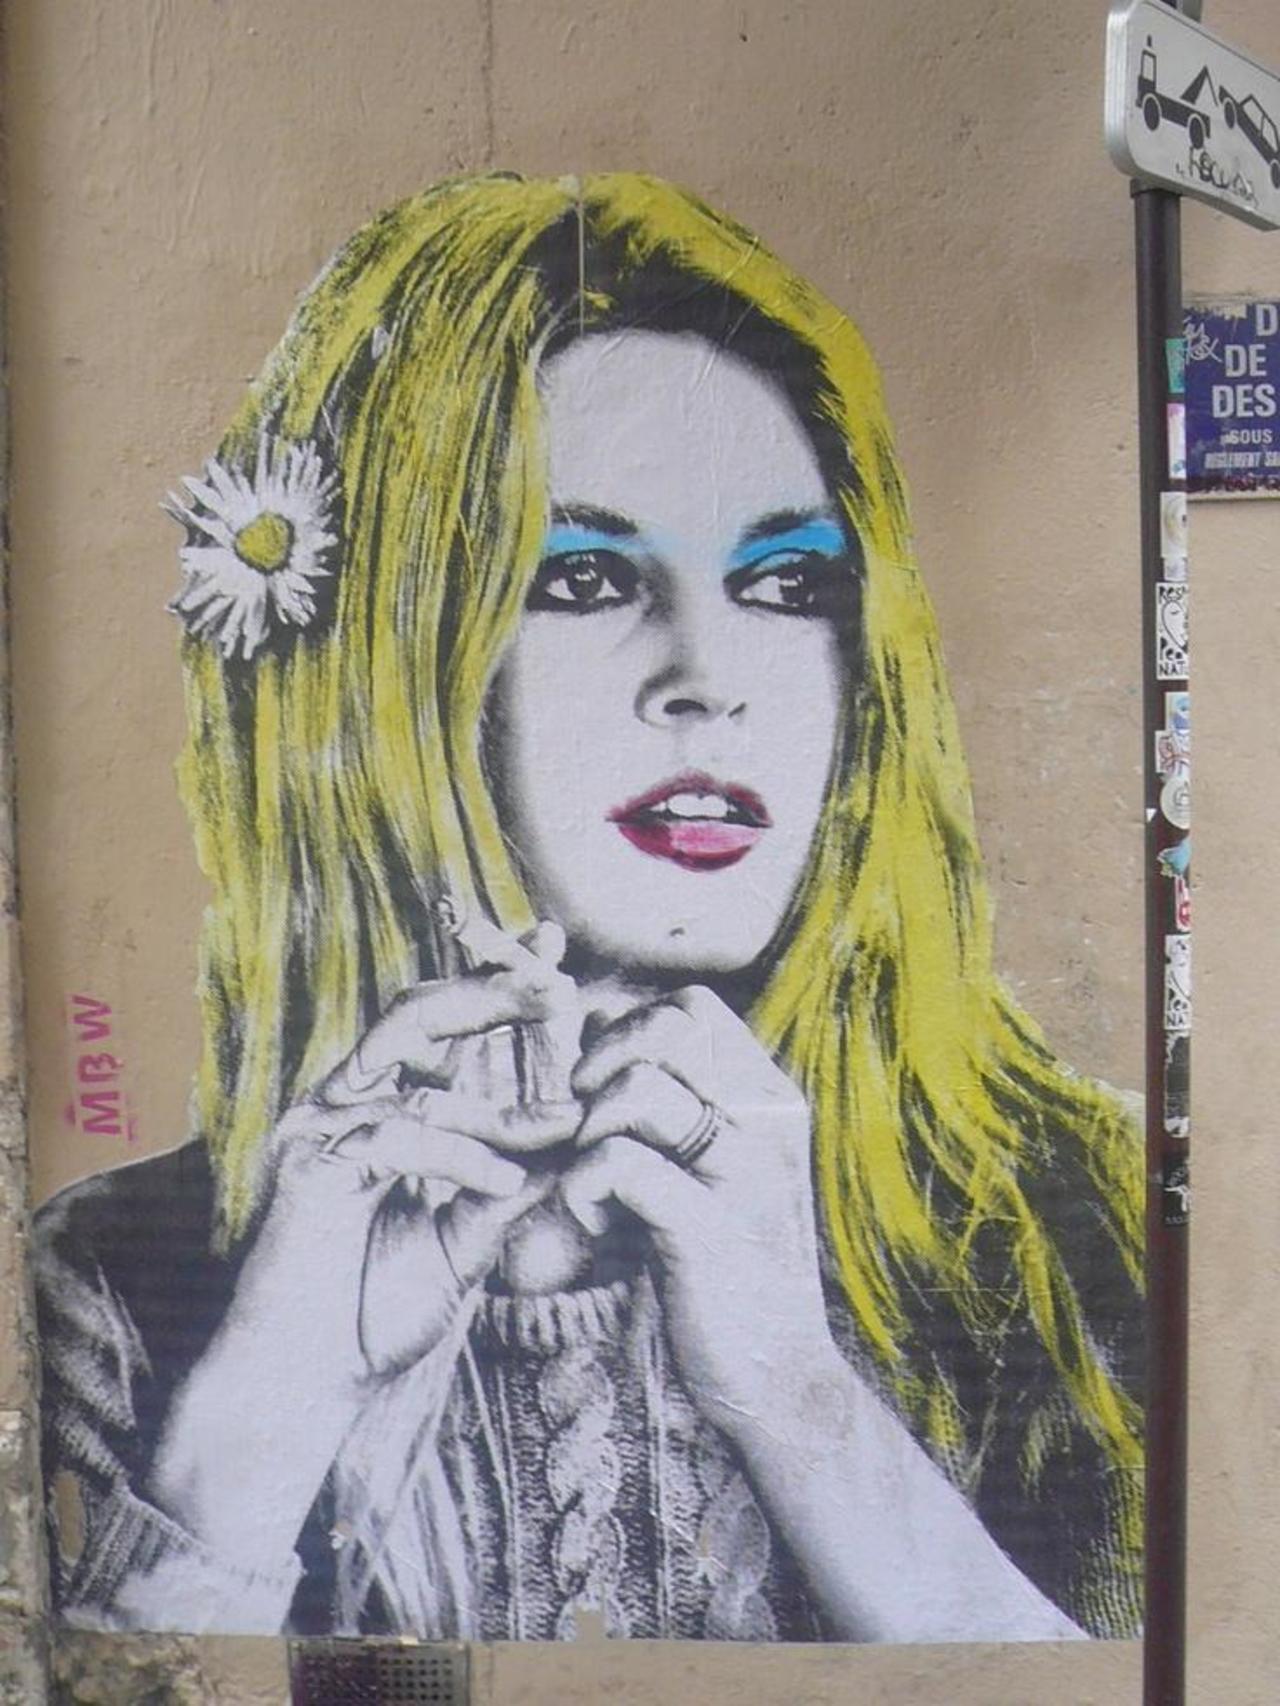 “@gianni_nigia: “@DlgermanyDavid: RT @FAMDigital: Parisian Graffiti http://bit.ly/1usFqIj #streetart #art http://t.co/hvg26QxCnJ””